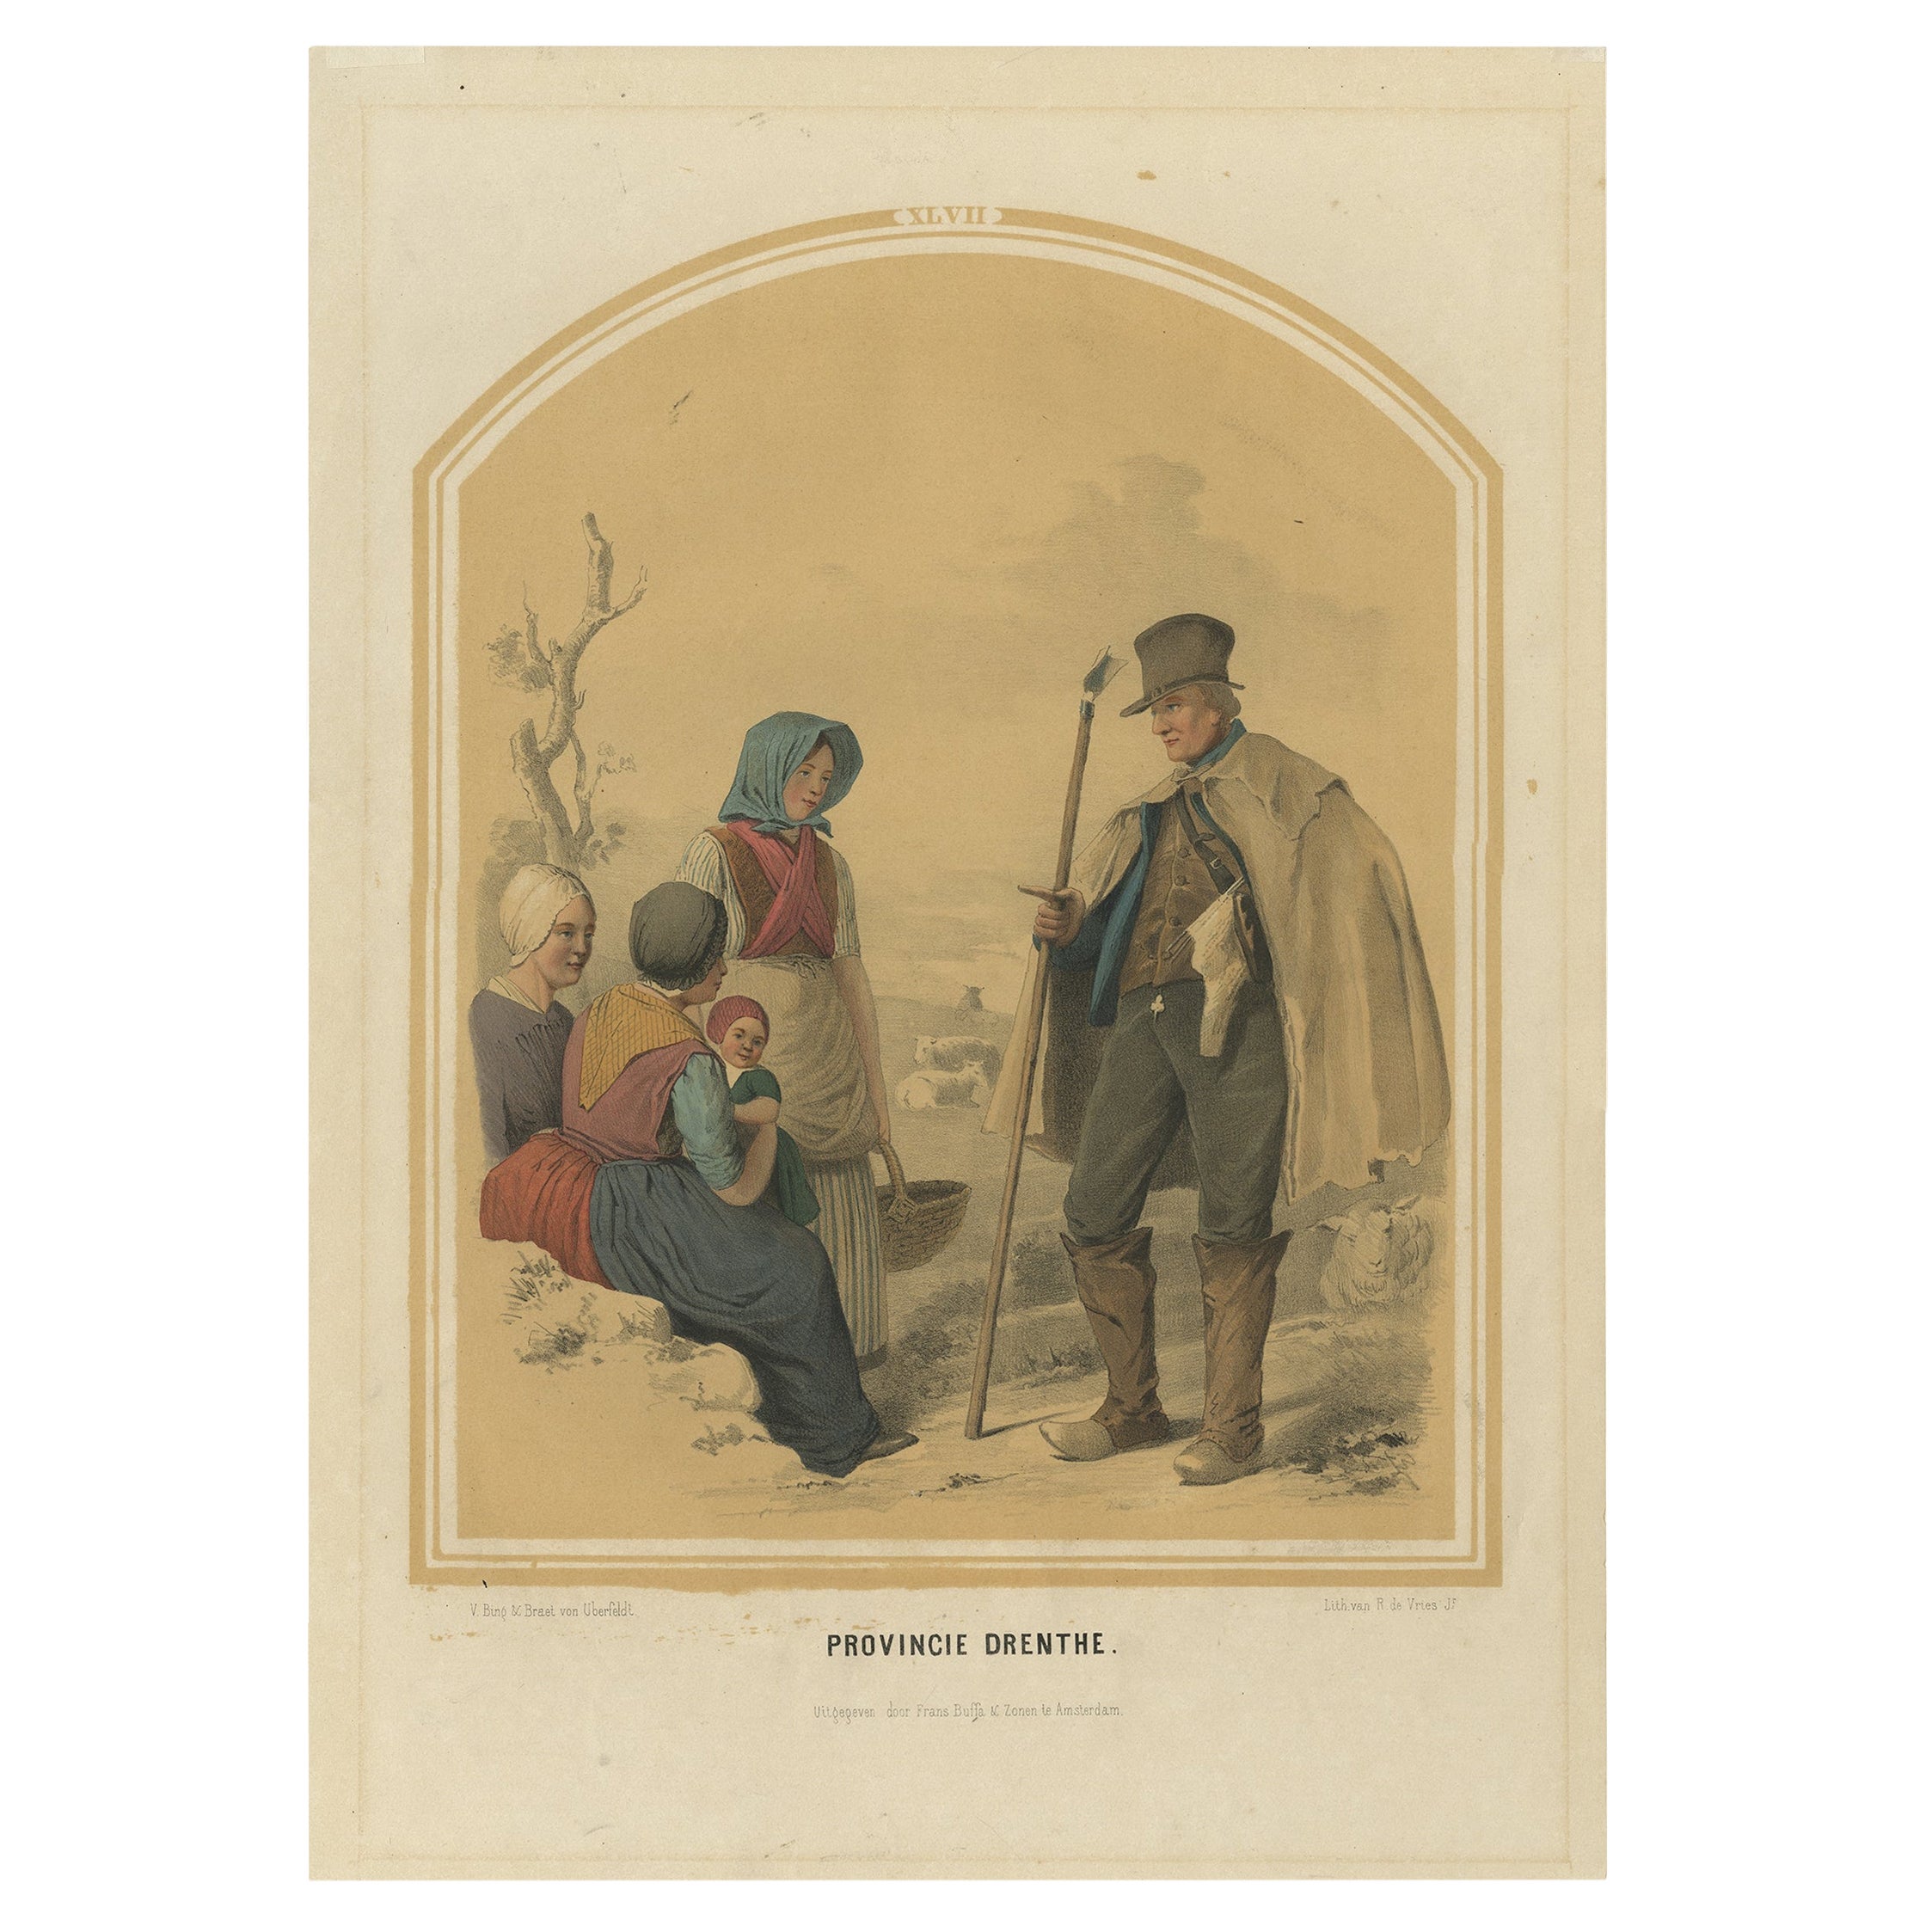 Ancienne estampe de costume de la province de Drenthe, Hollande, 1857